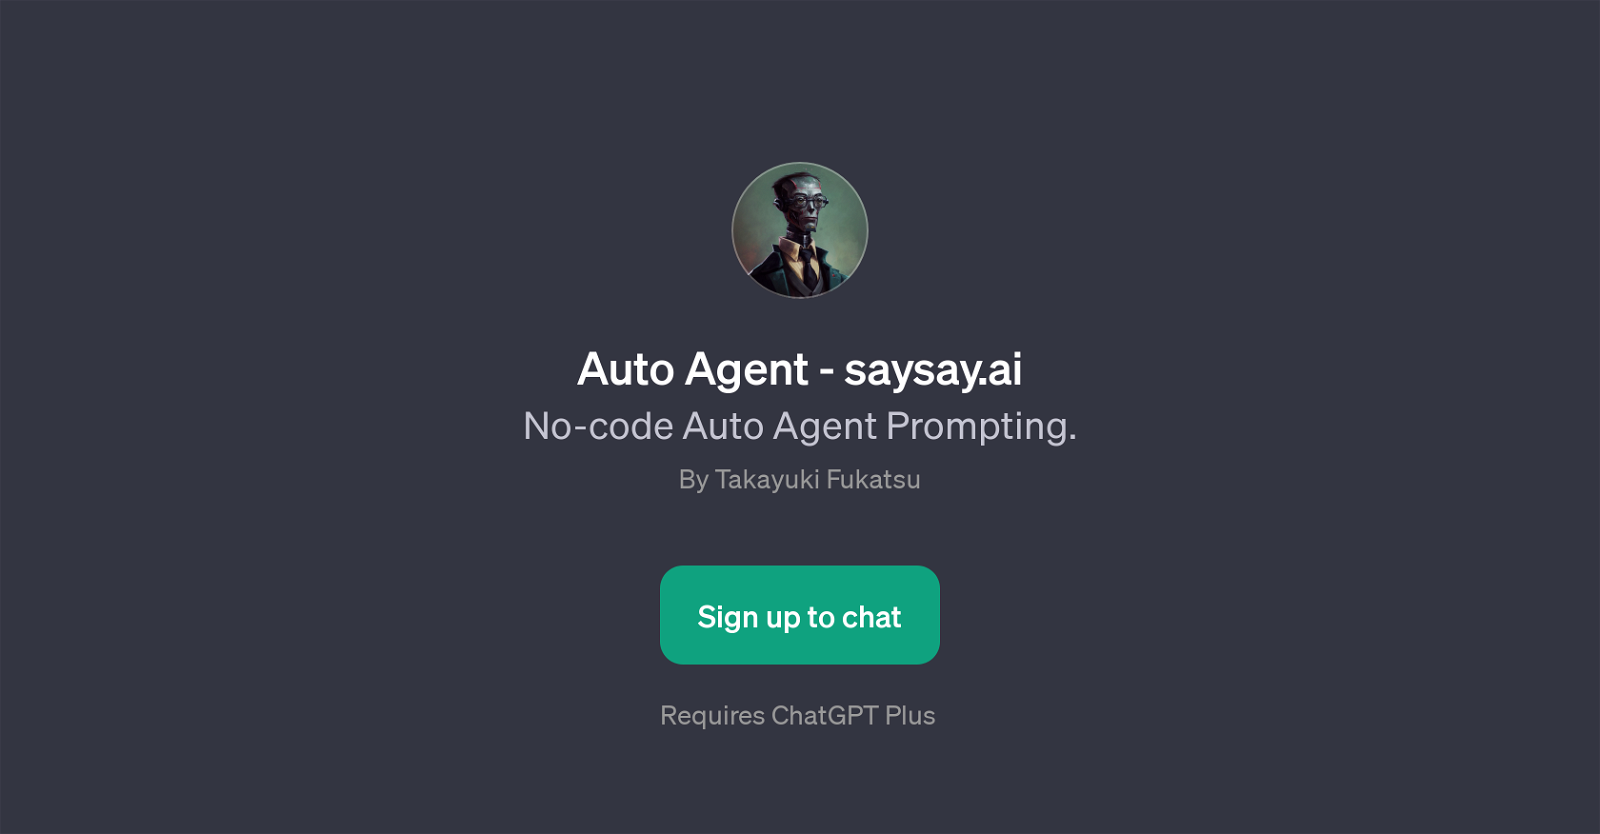 Auto Agent website